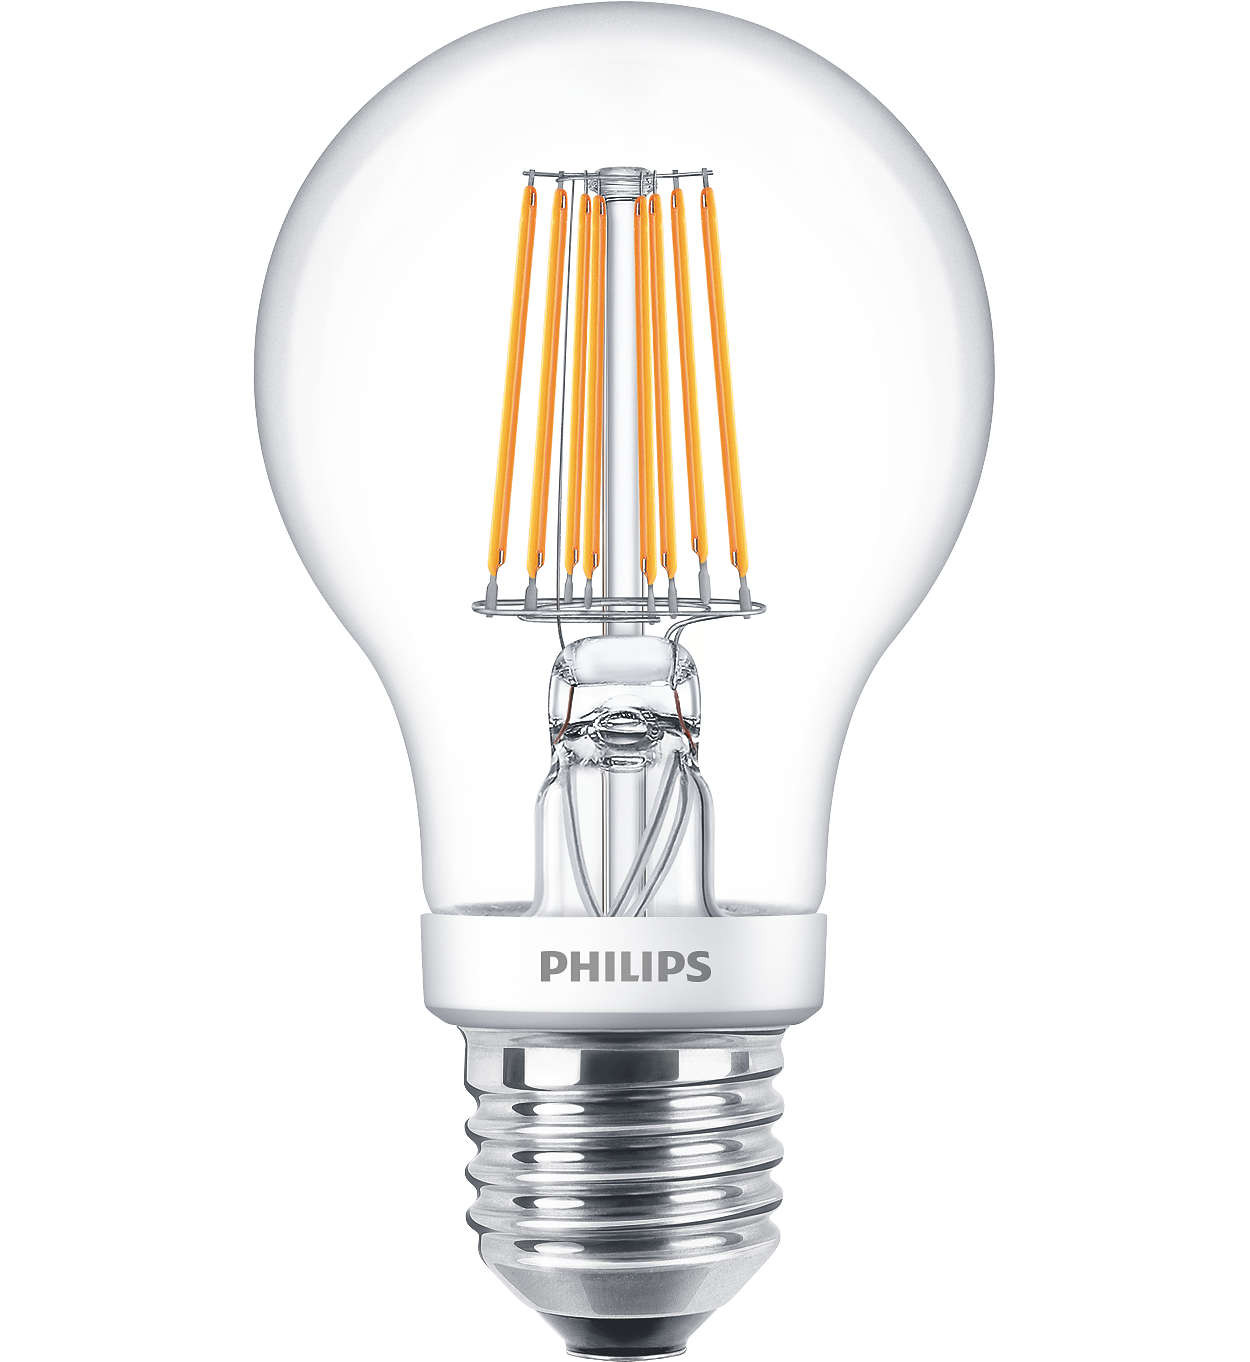 Philips Filament Classic LEDBulb DT 7.5-60W E27 A60